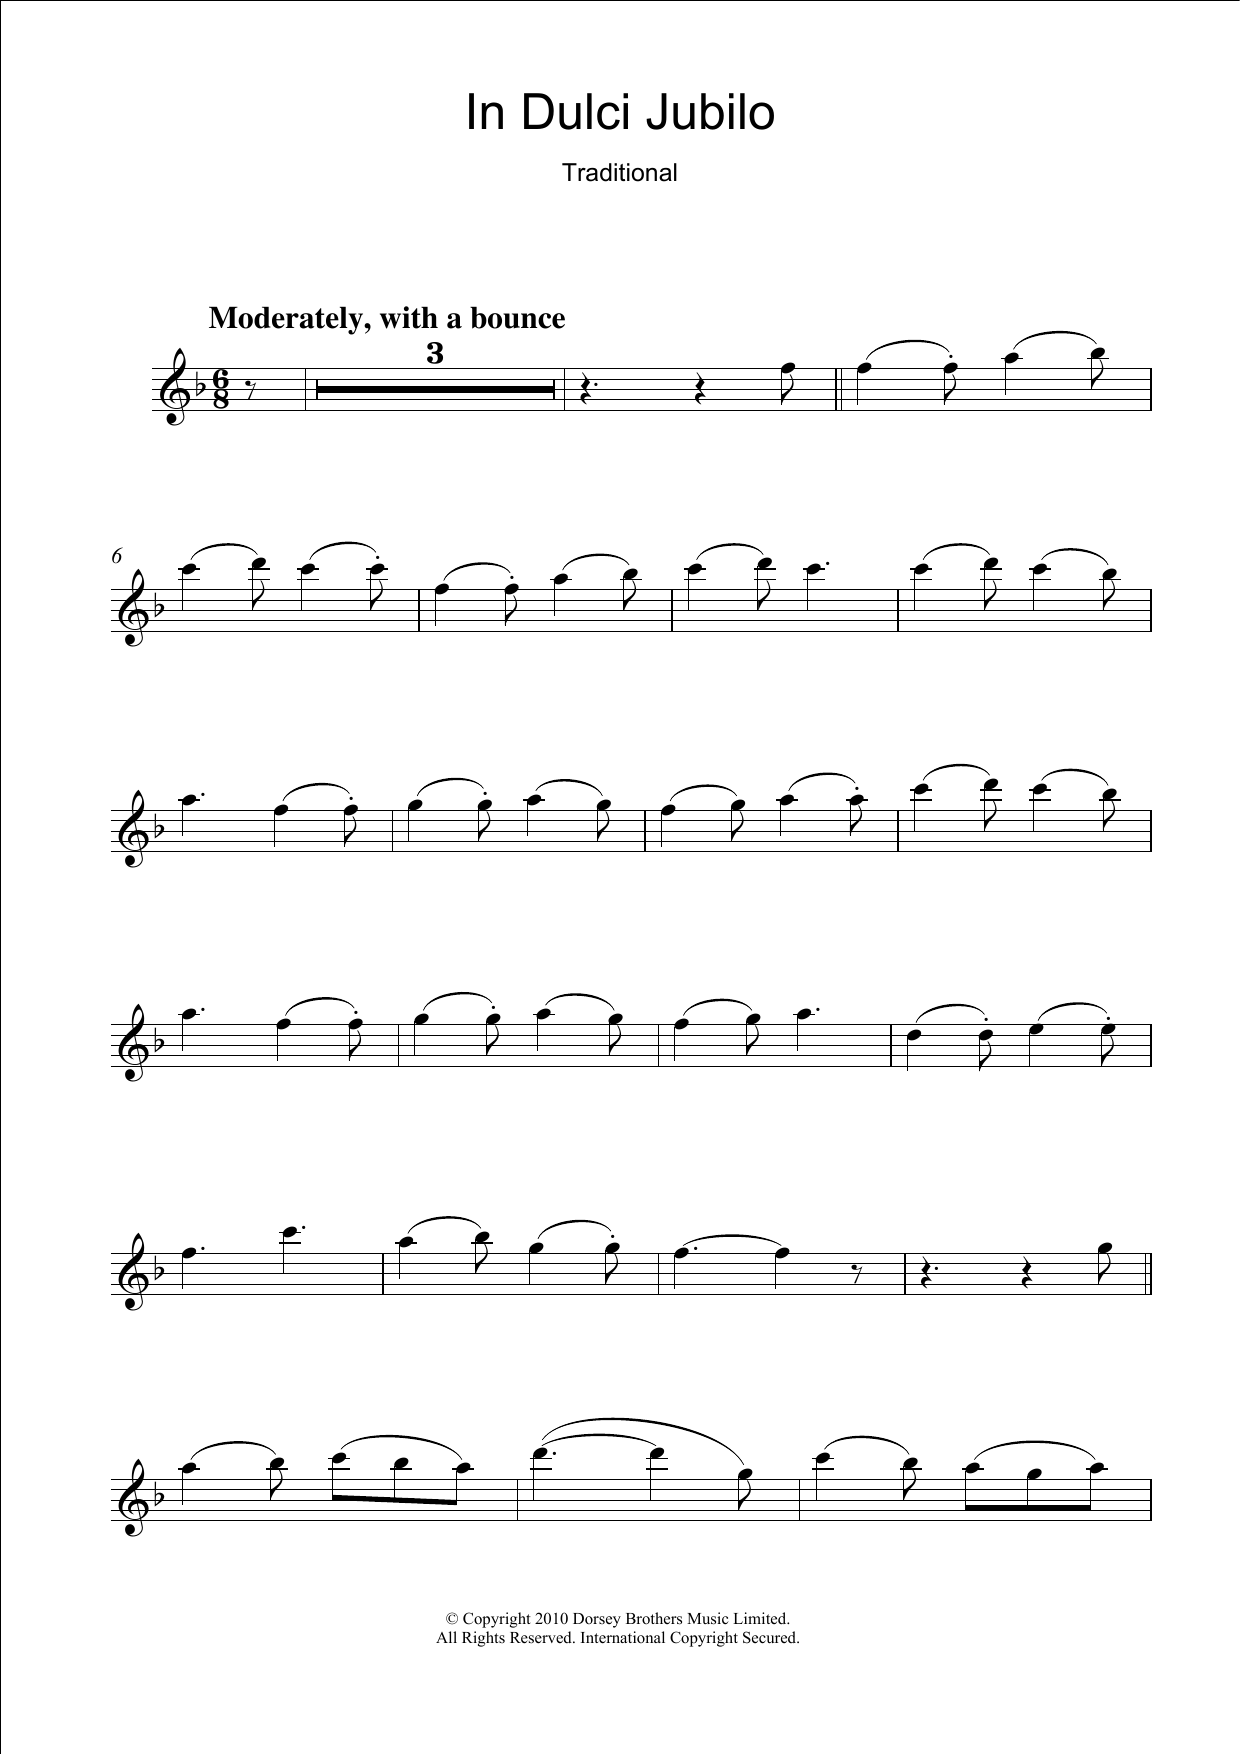 Traditional Carol In Dulci Jubilo Sheet Music Notes & Chords for Alto Saxophone - Download or Print PDF